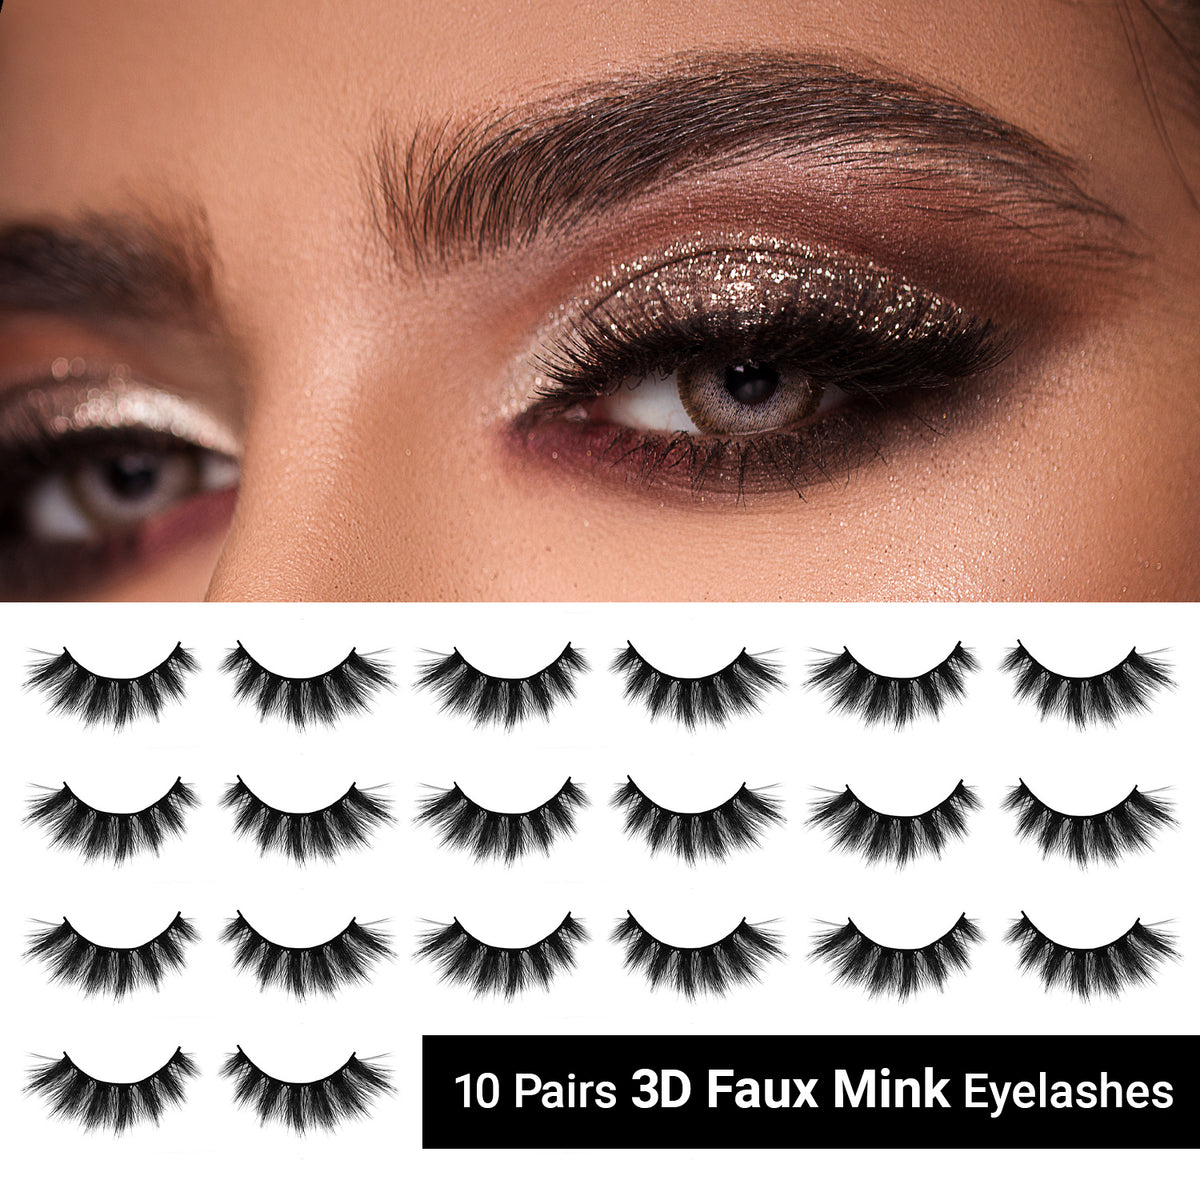 3D Faux Mink Eyelashes Jumbo Pack 10 Pairs